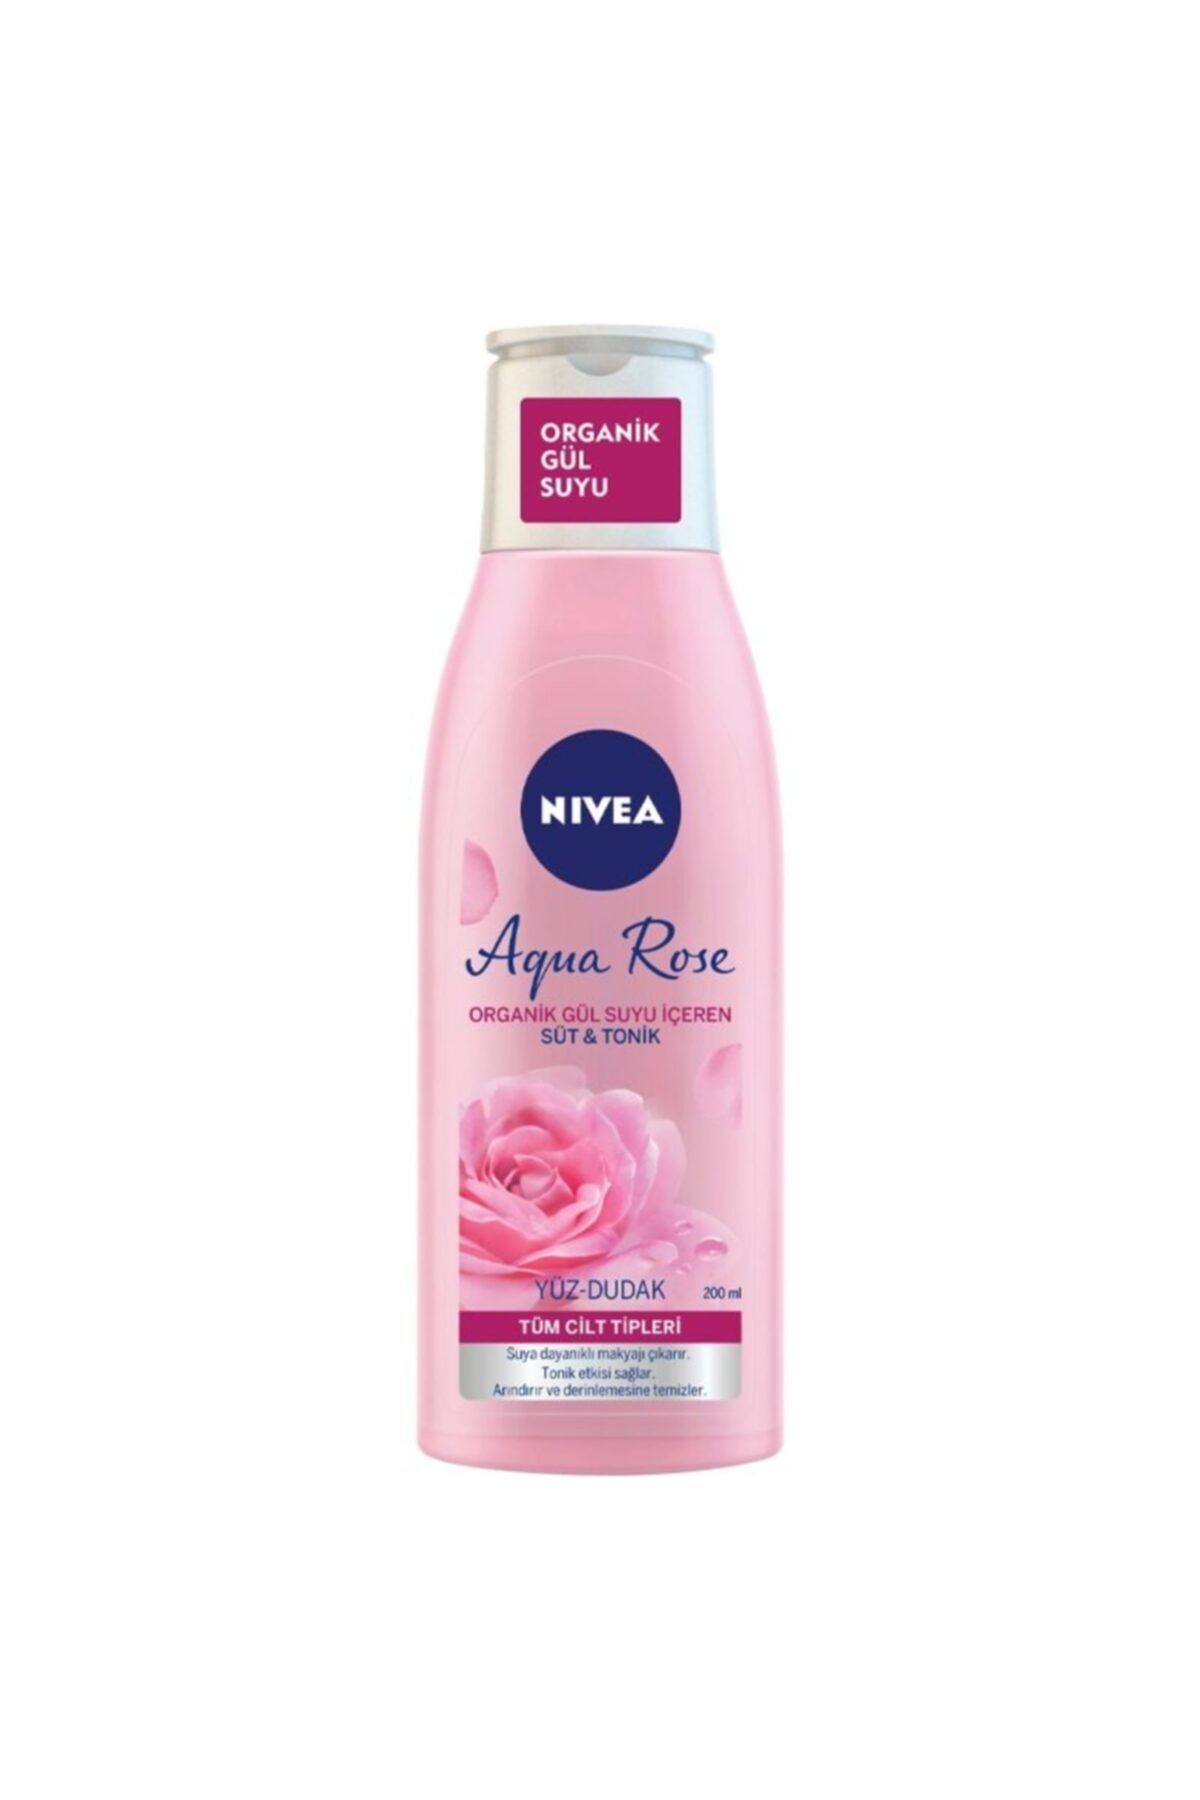 NIVEA Aqua Rose Organik Gül Suyu Içeren Süt & Tonik 200 ml